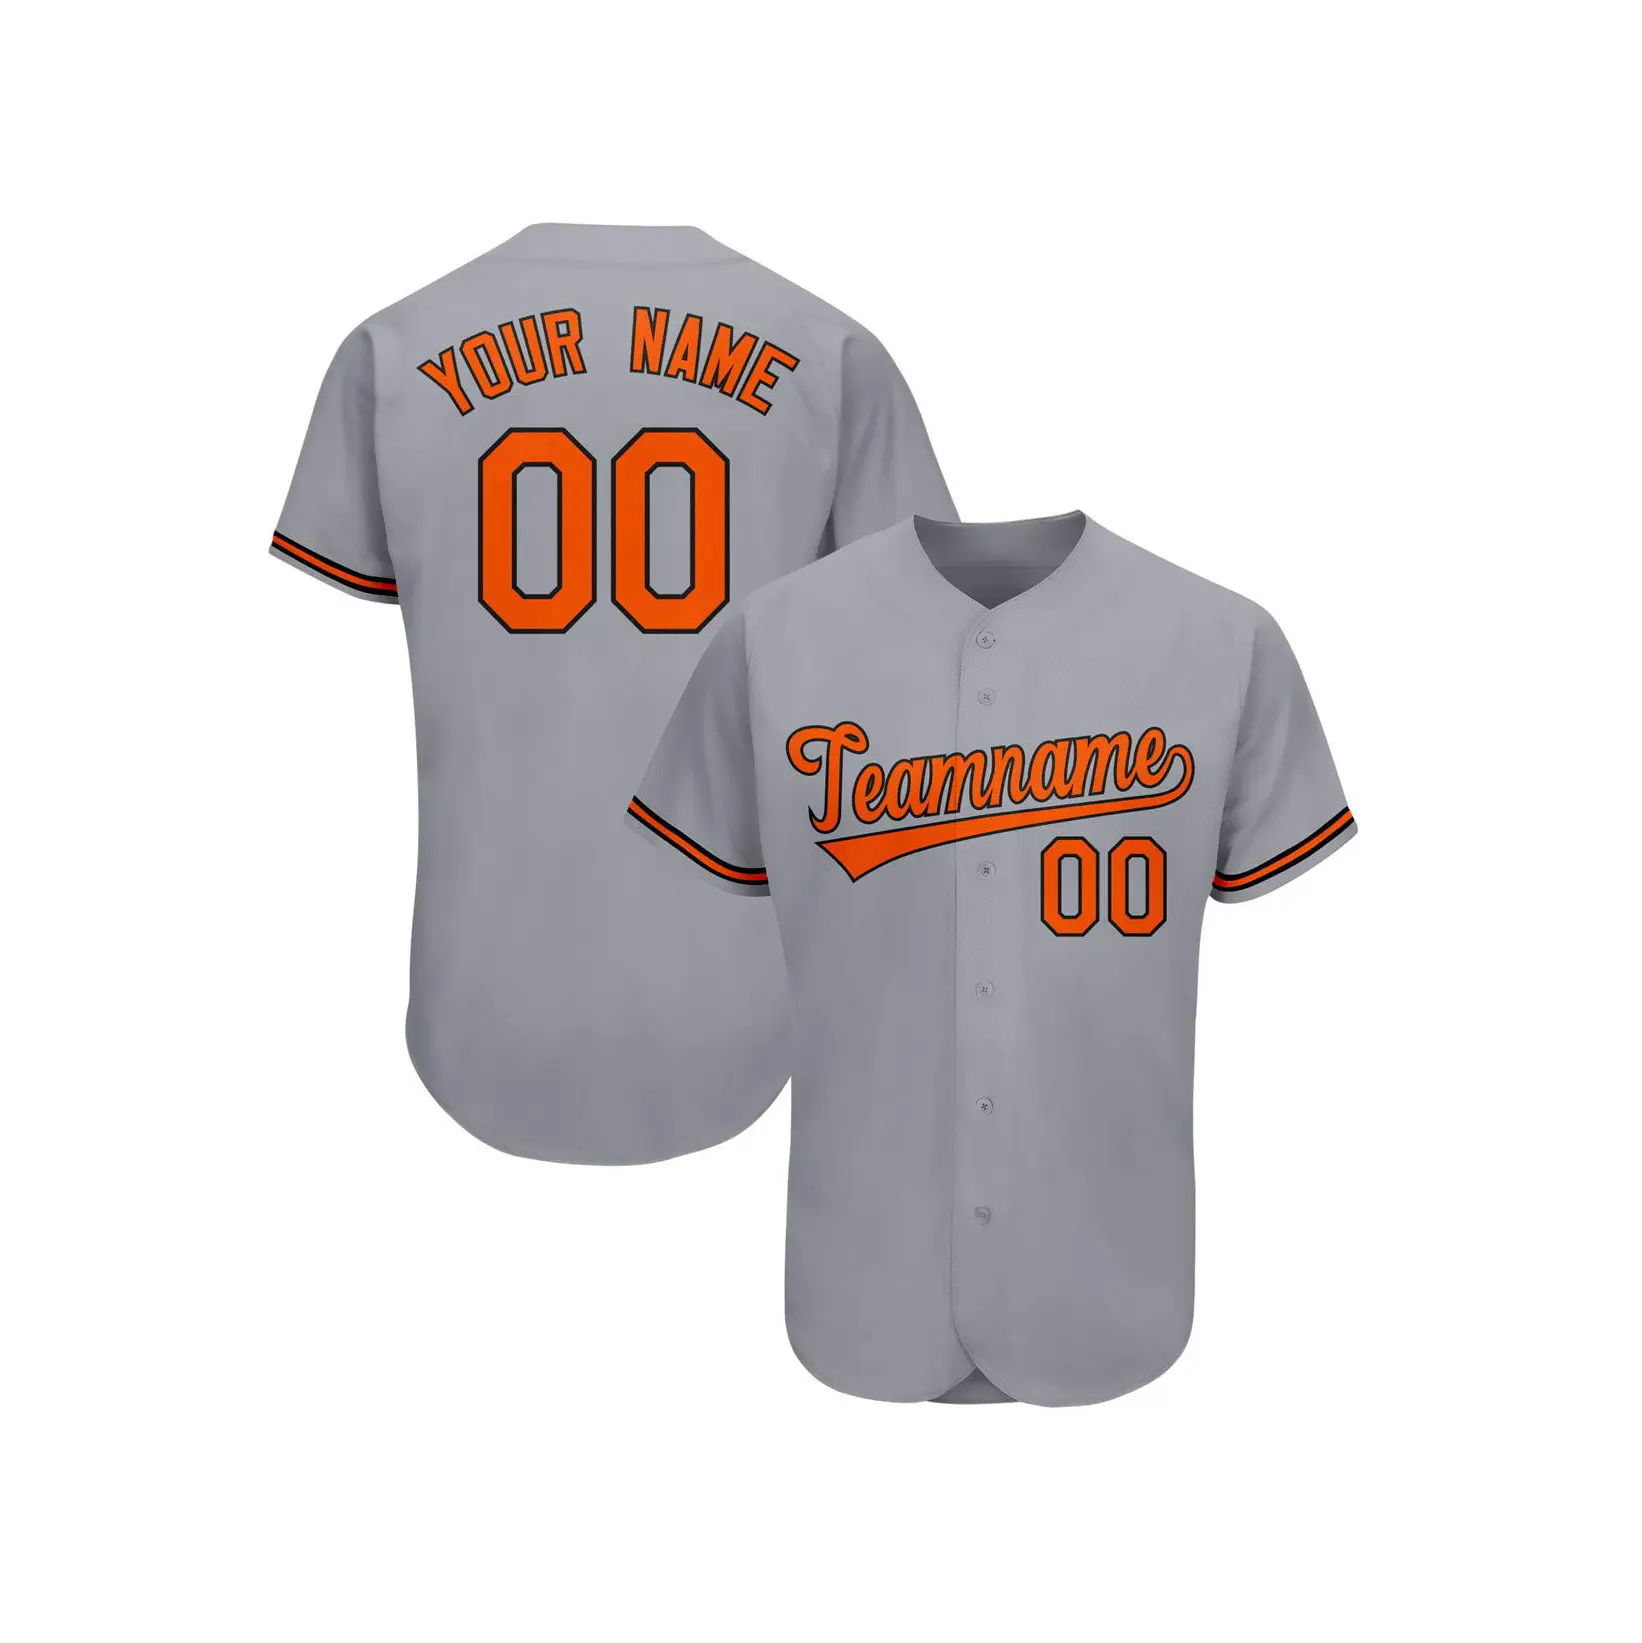 Button up Baseball Jersey Shirt Top Quality Customized Mens Short Sleeve Baseball & Softball Wear Custom Made Team Name Unisex